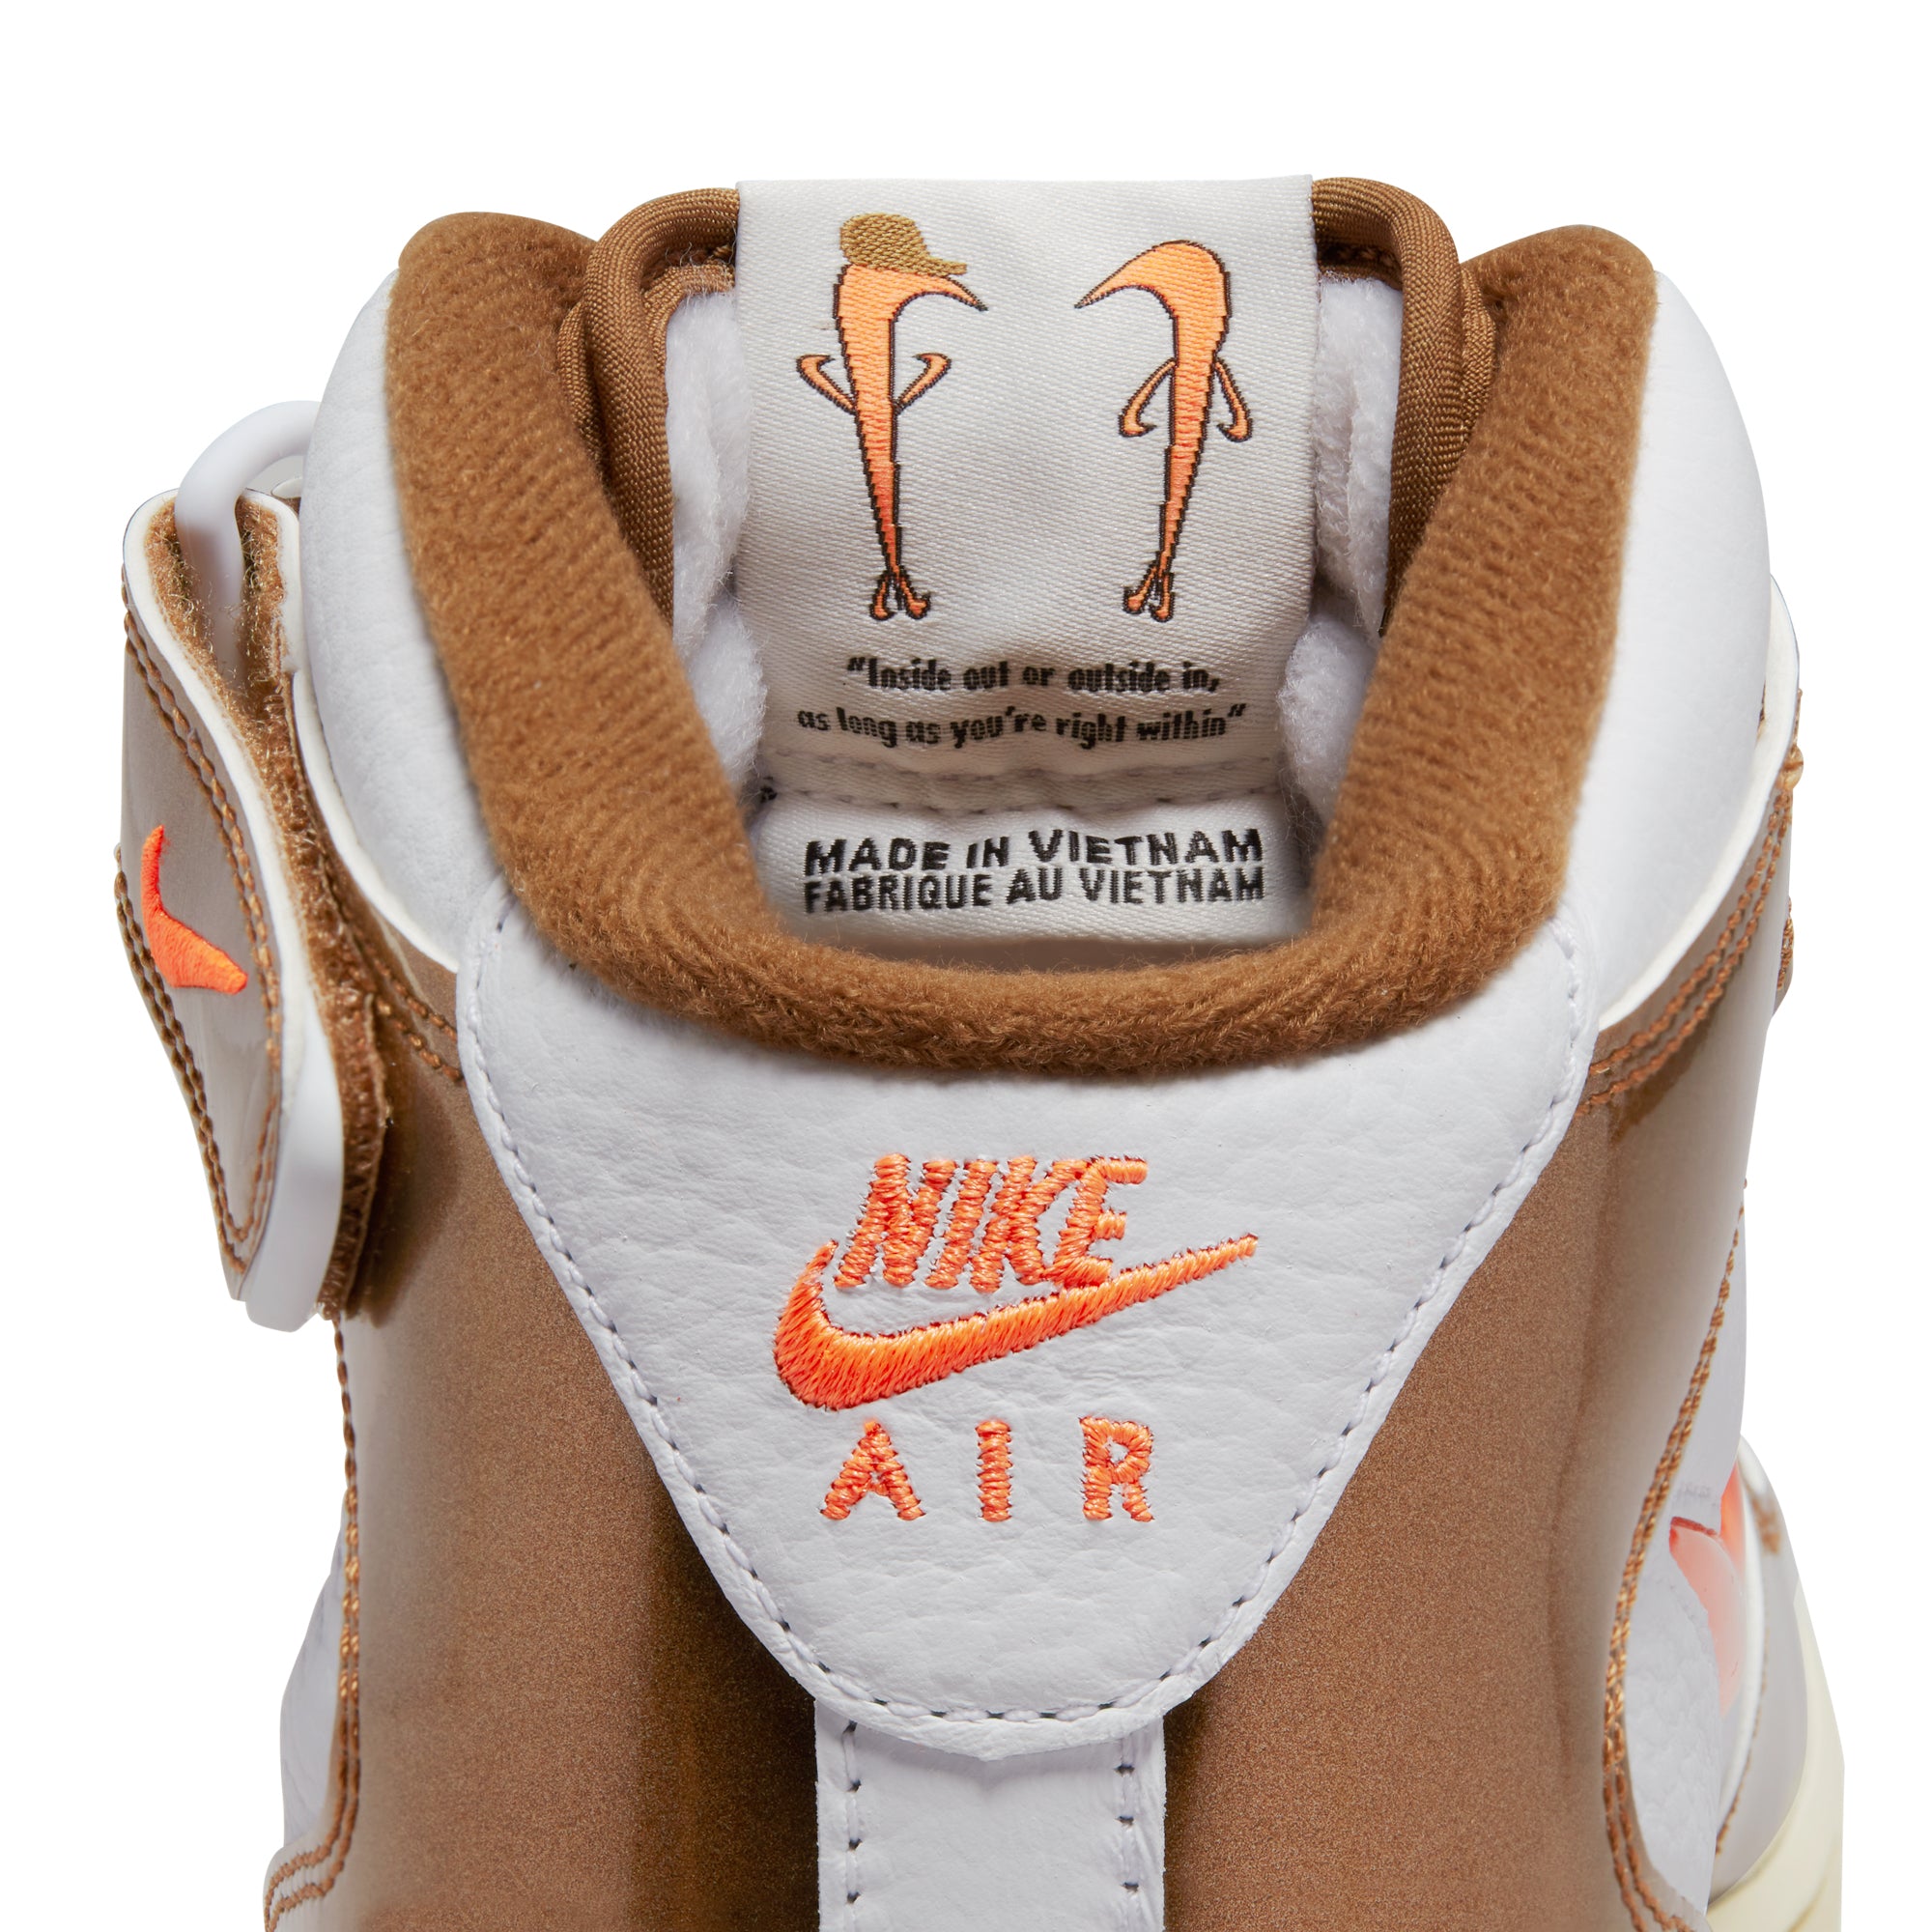  Nike Mens Air Force 1 Mid QS DH5623 100 Ale Brown - Size 7